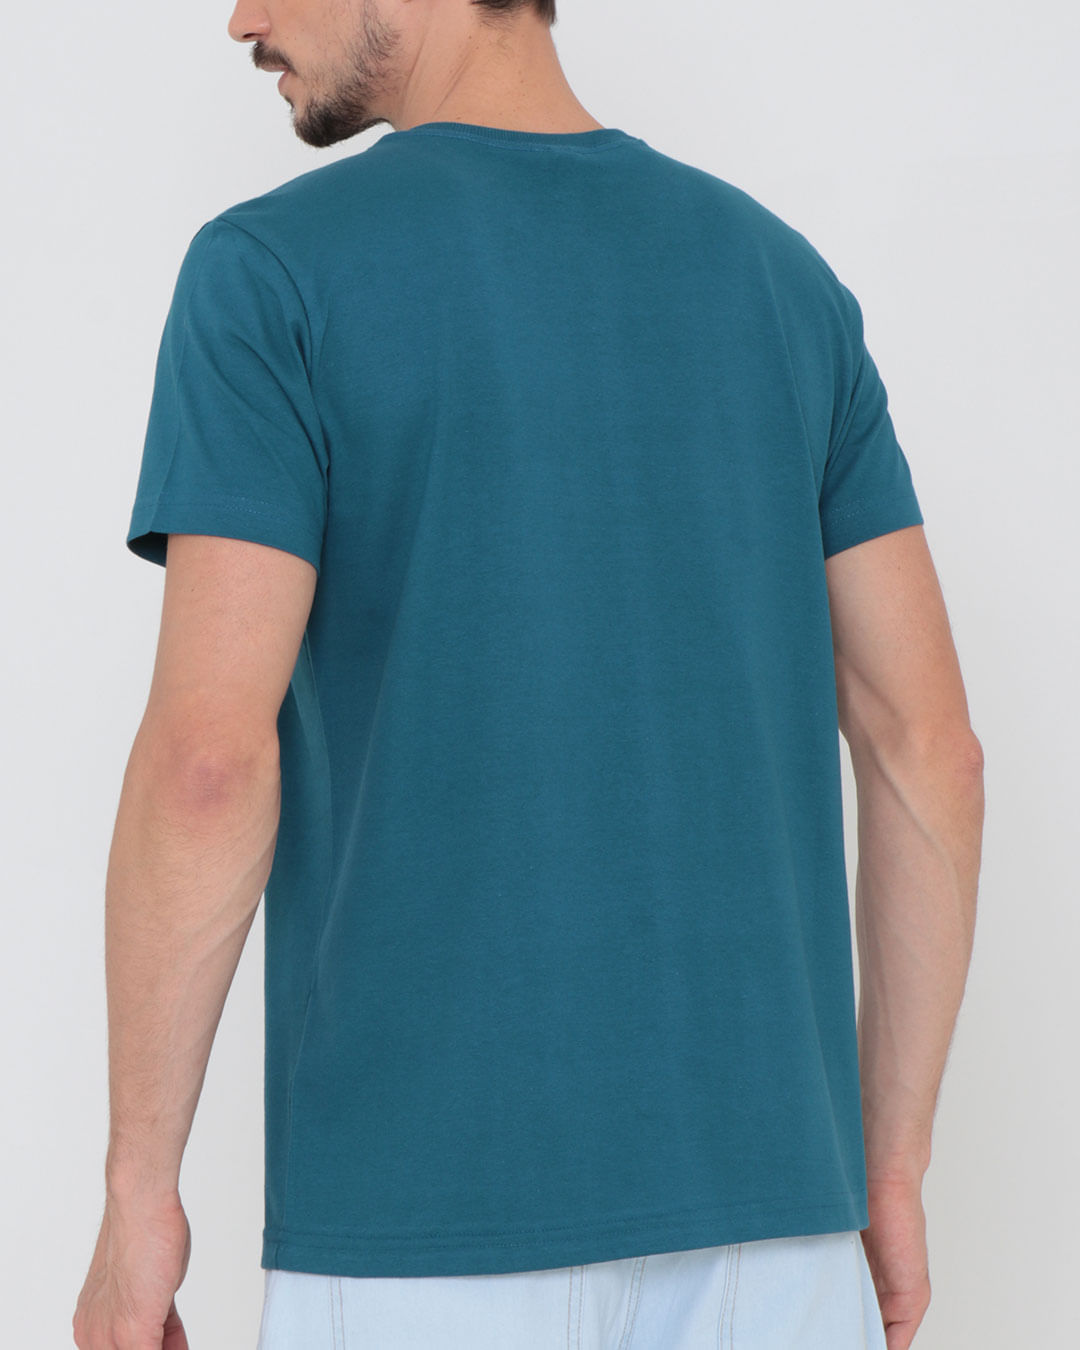 Camiseta-Estampa-Ecko-Azul-Escuro